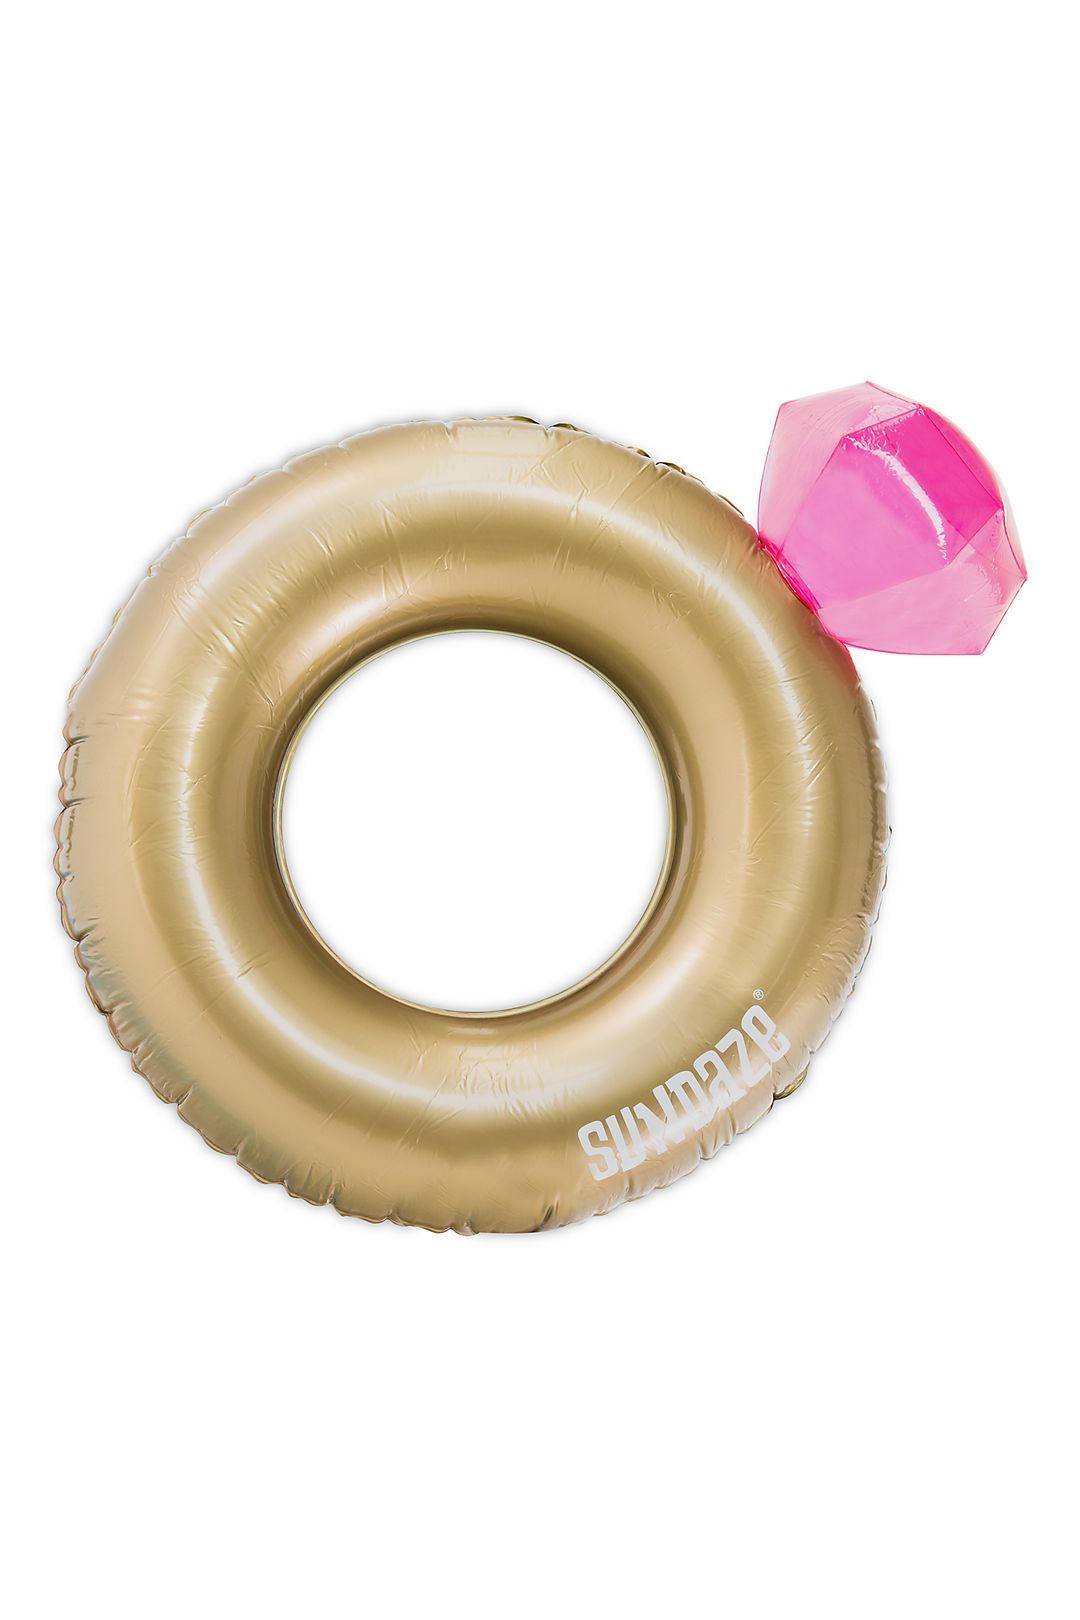 Diamond Ring Inflatable Pool Float Image 1